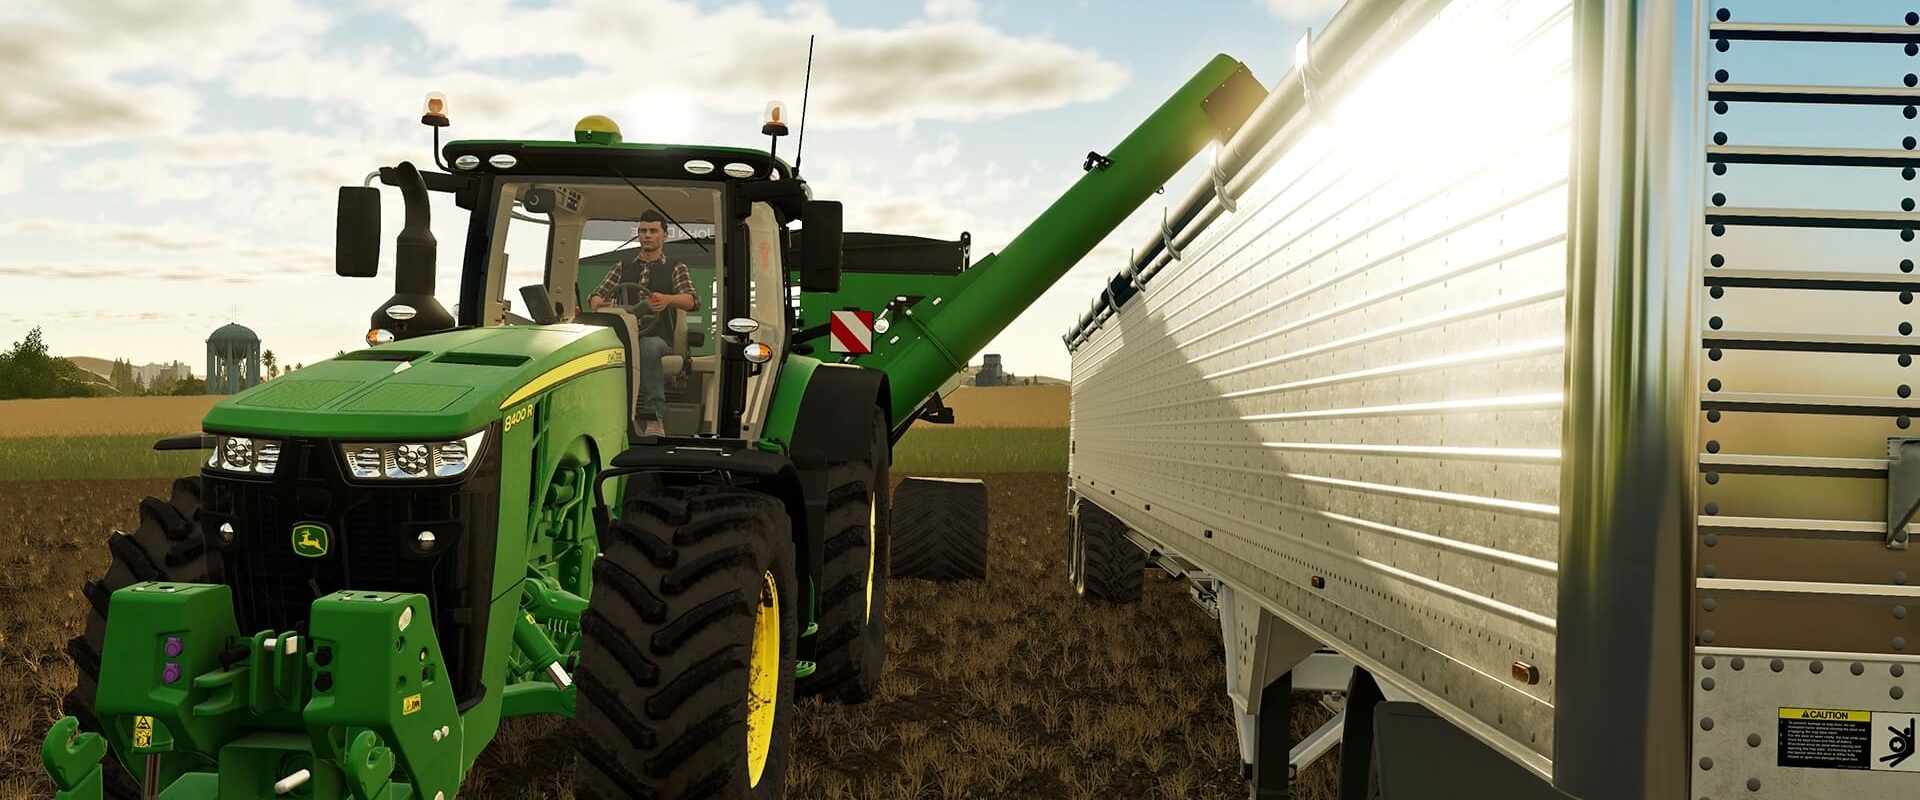 Hamarosan megérkezik a Farming Simulator 19!